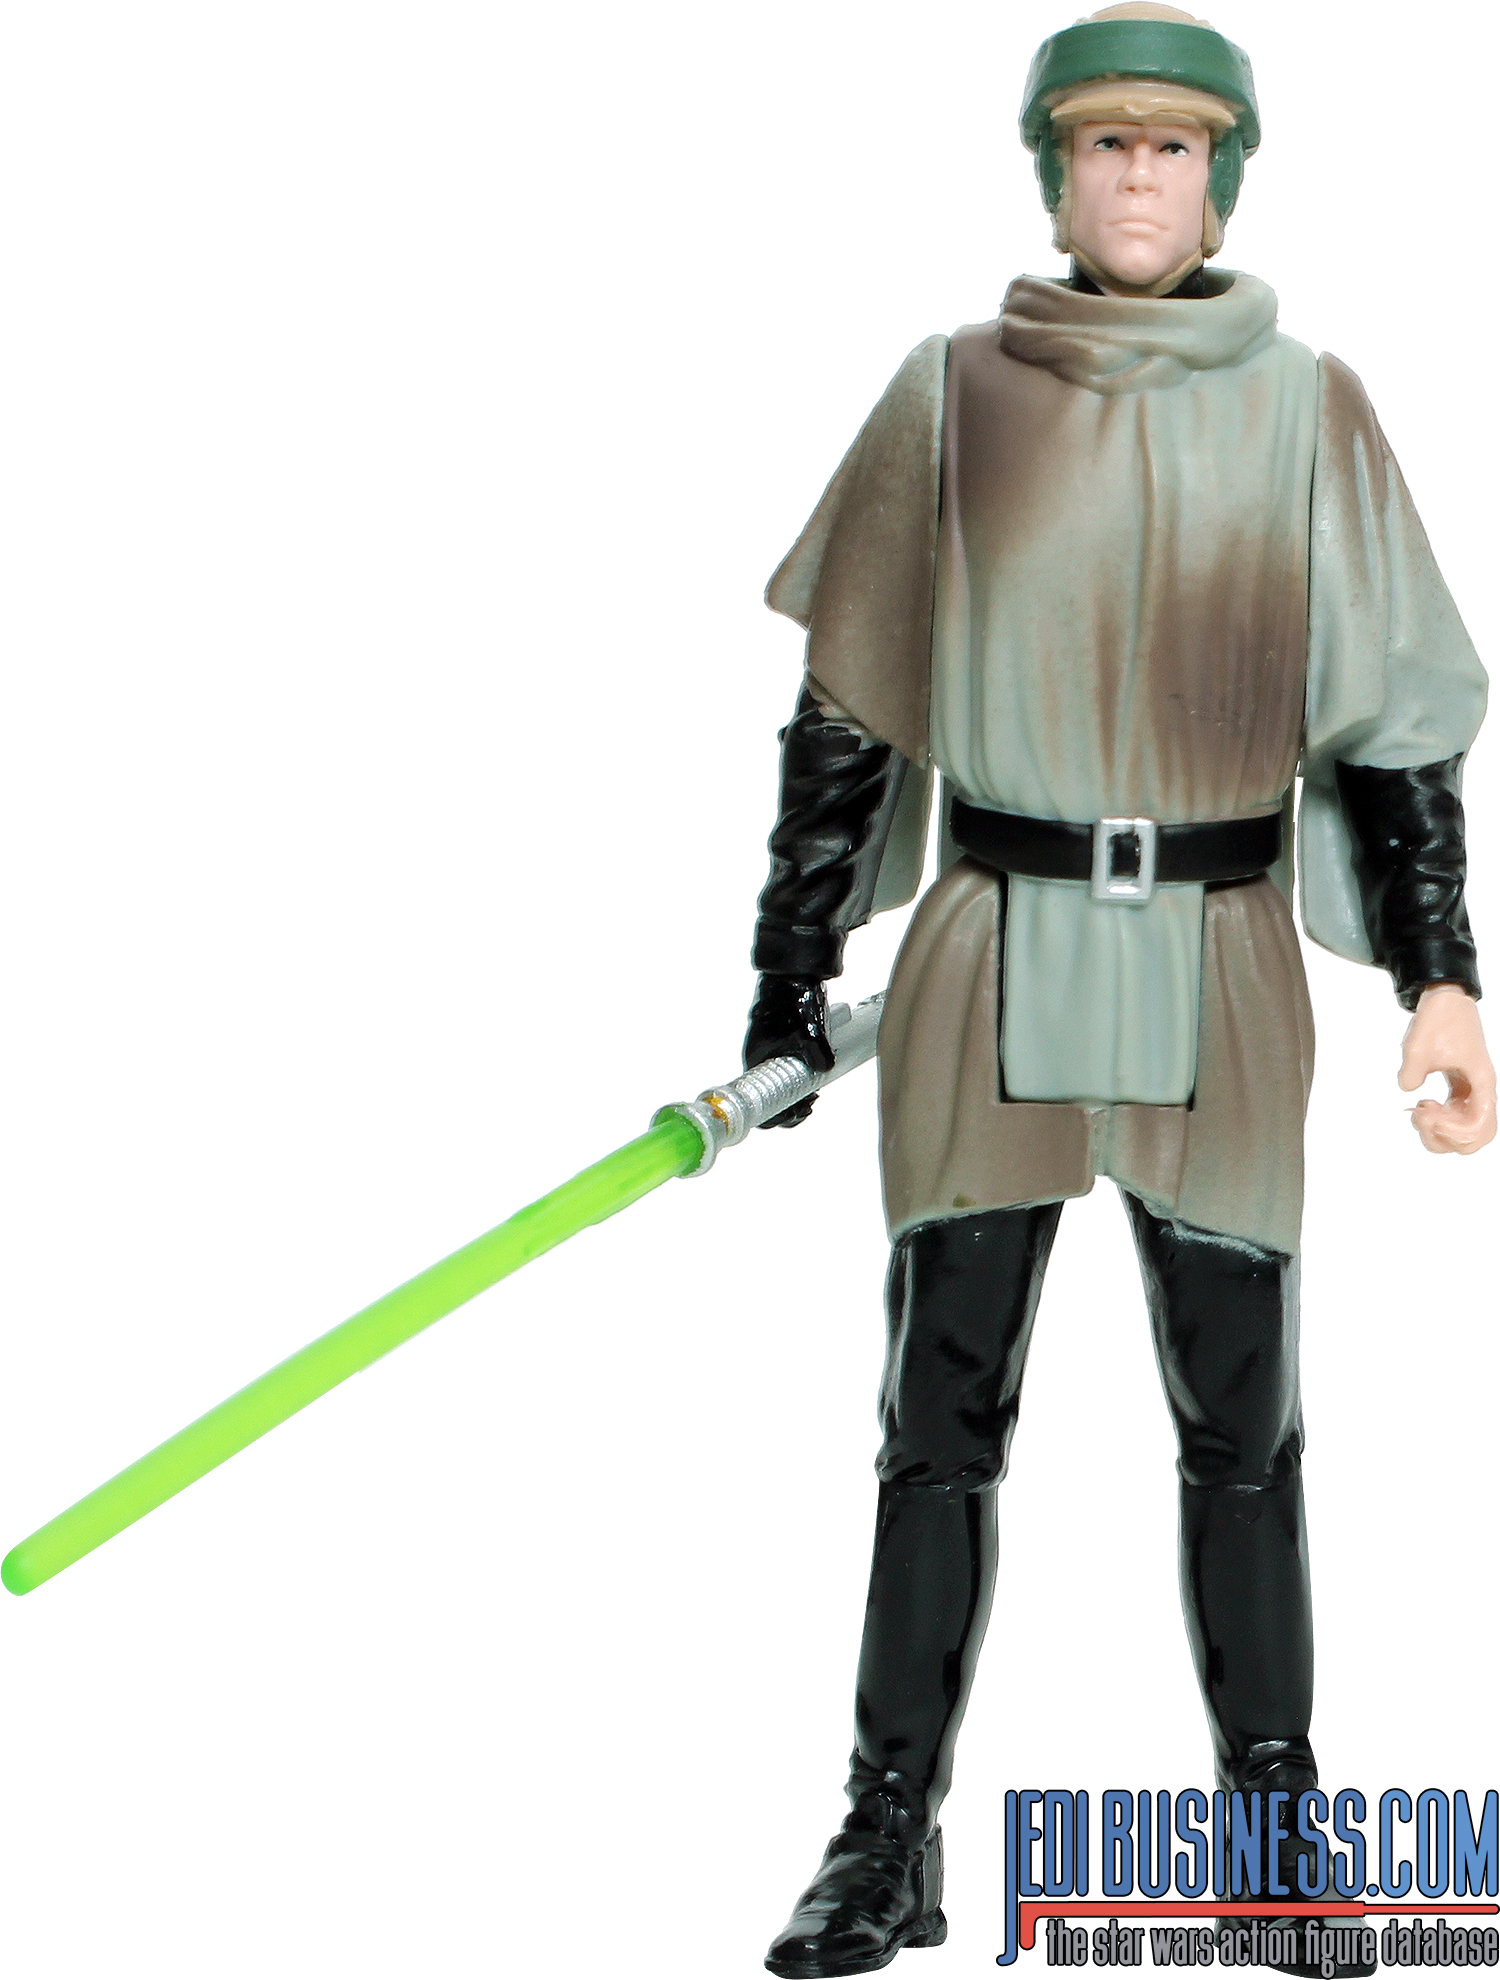 Luke Skywalker Era Of The Force 8-Pack